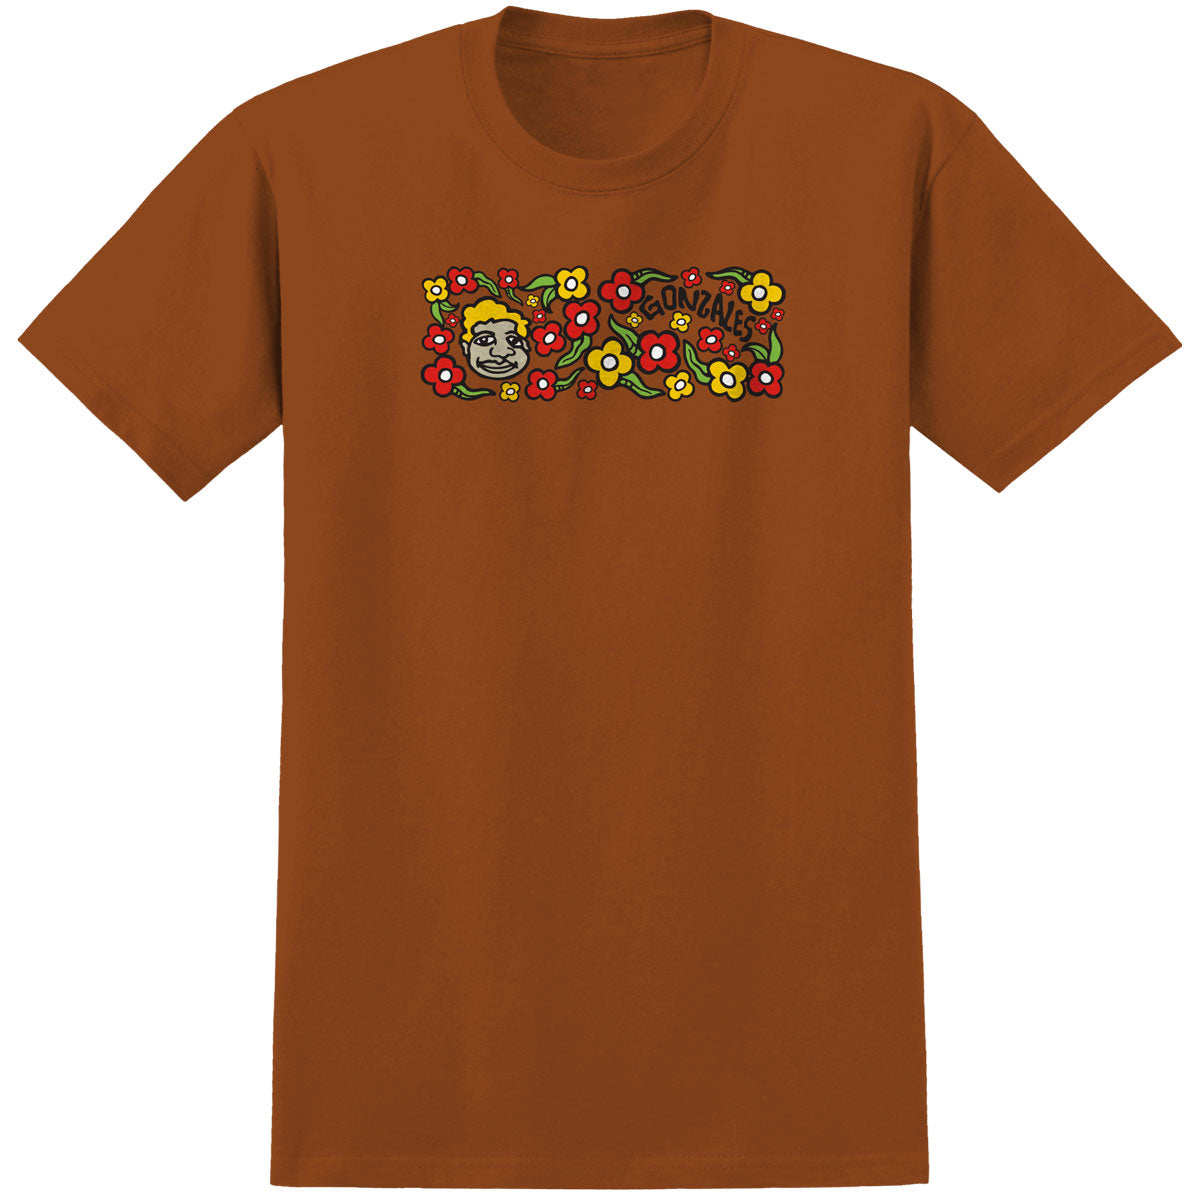 Krooked Sweatpants T-Shirt - Orange/Multi image 1